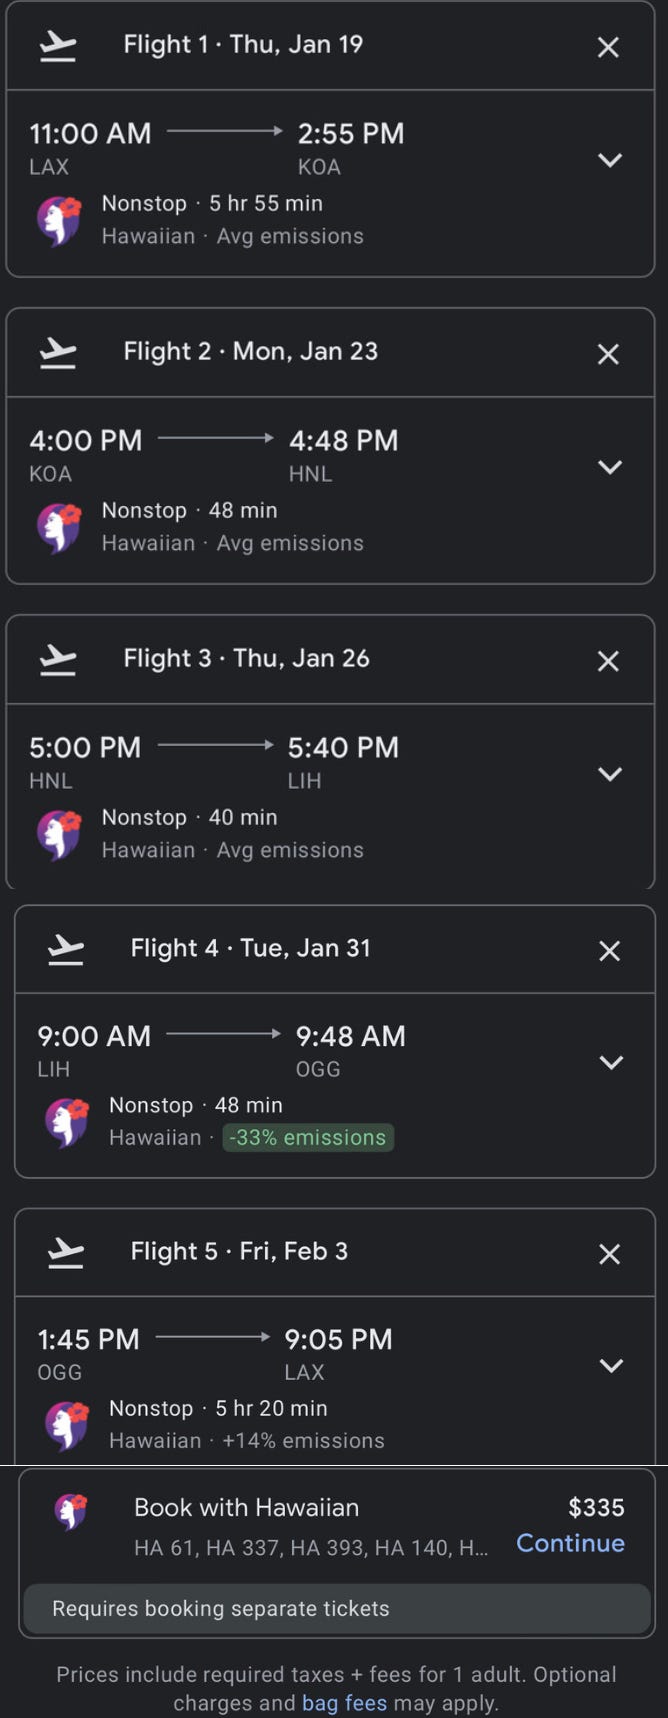 Screen shot o fHawaiian Dream Trip prices  With 4 Island Hopper Flights For $335